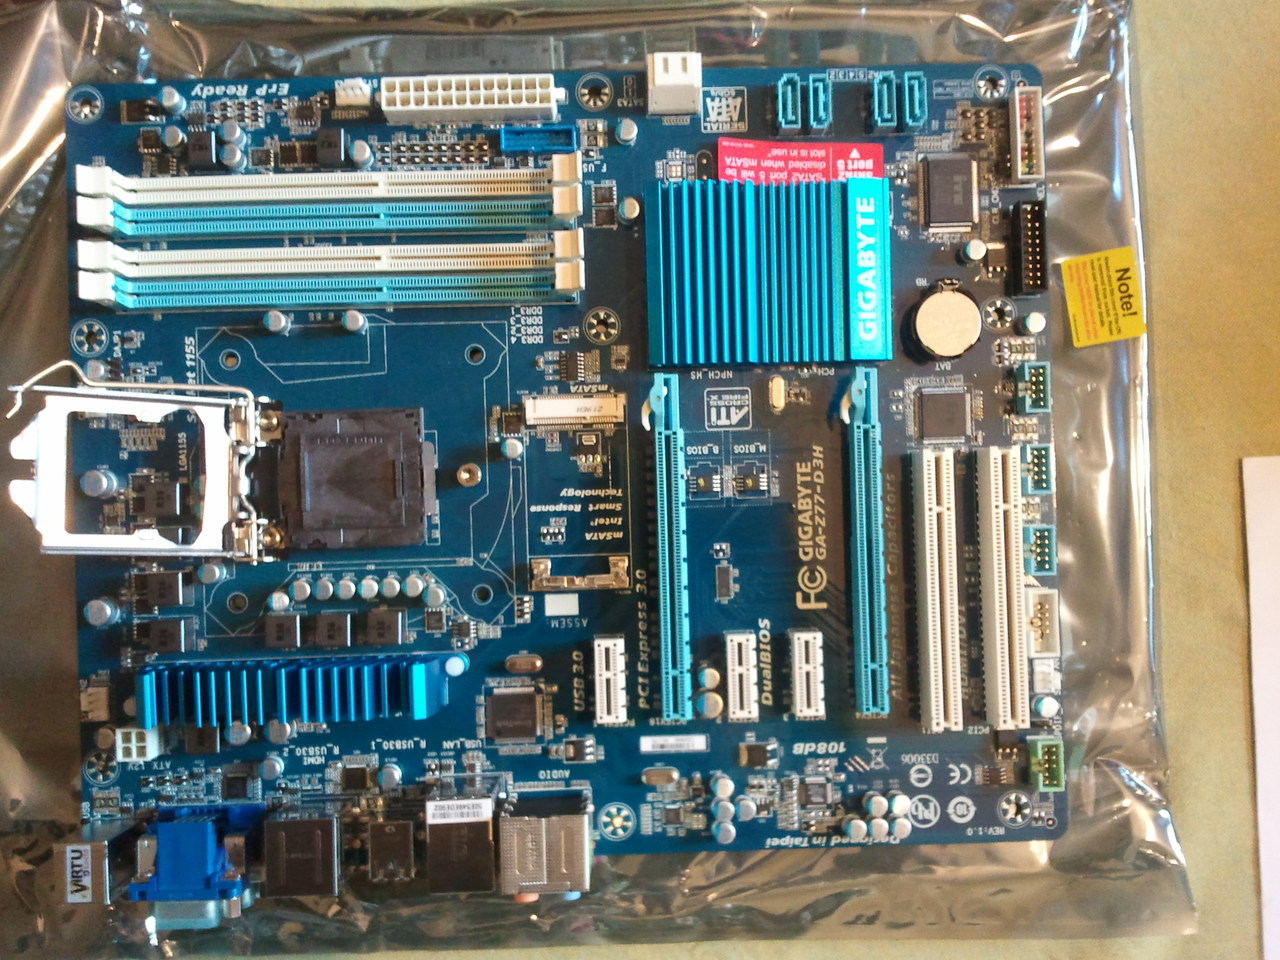 Bare Gigabyte Z77-D3H motherboard